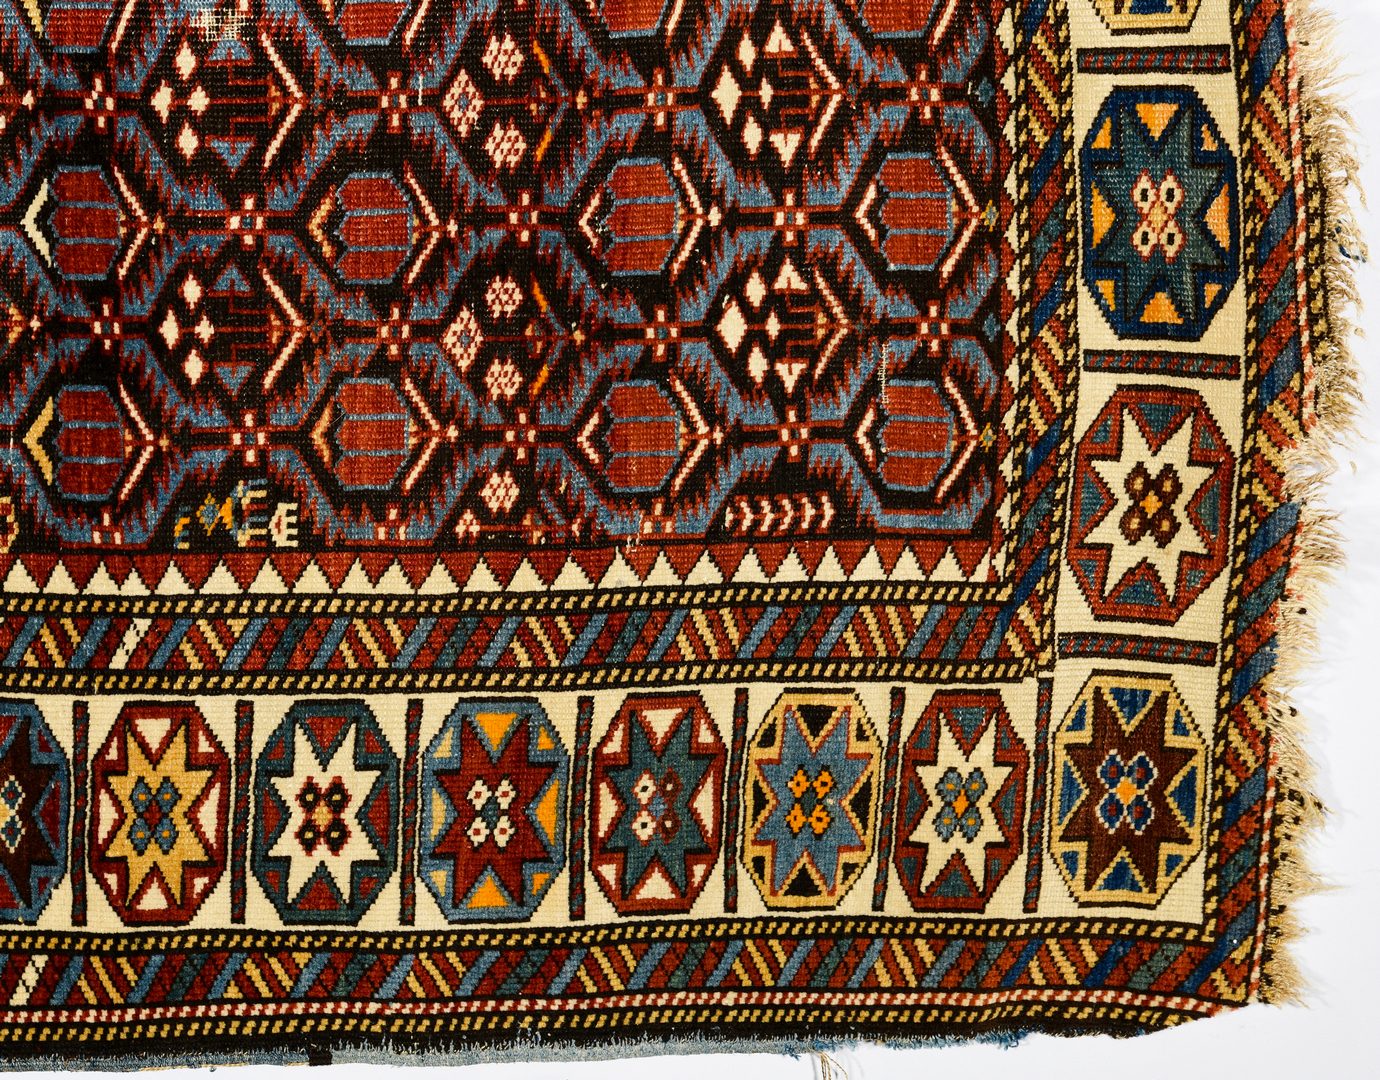 Lot 374: Antique Persian Kuba area rug, 3'7" x 5'4"